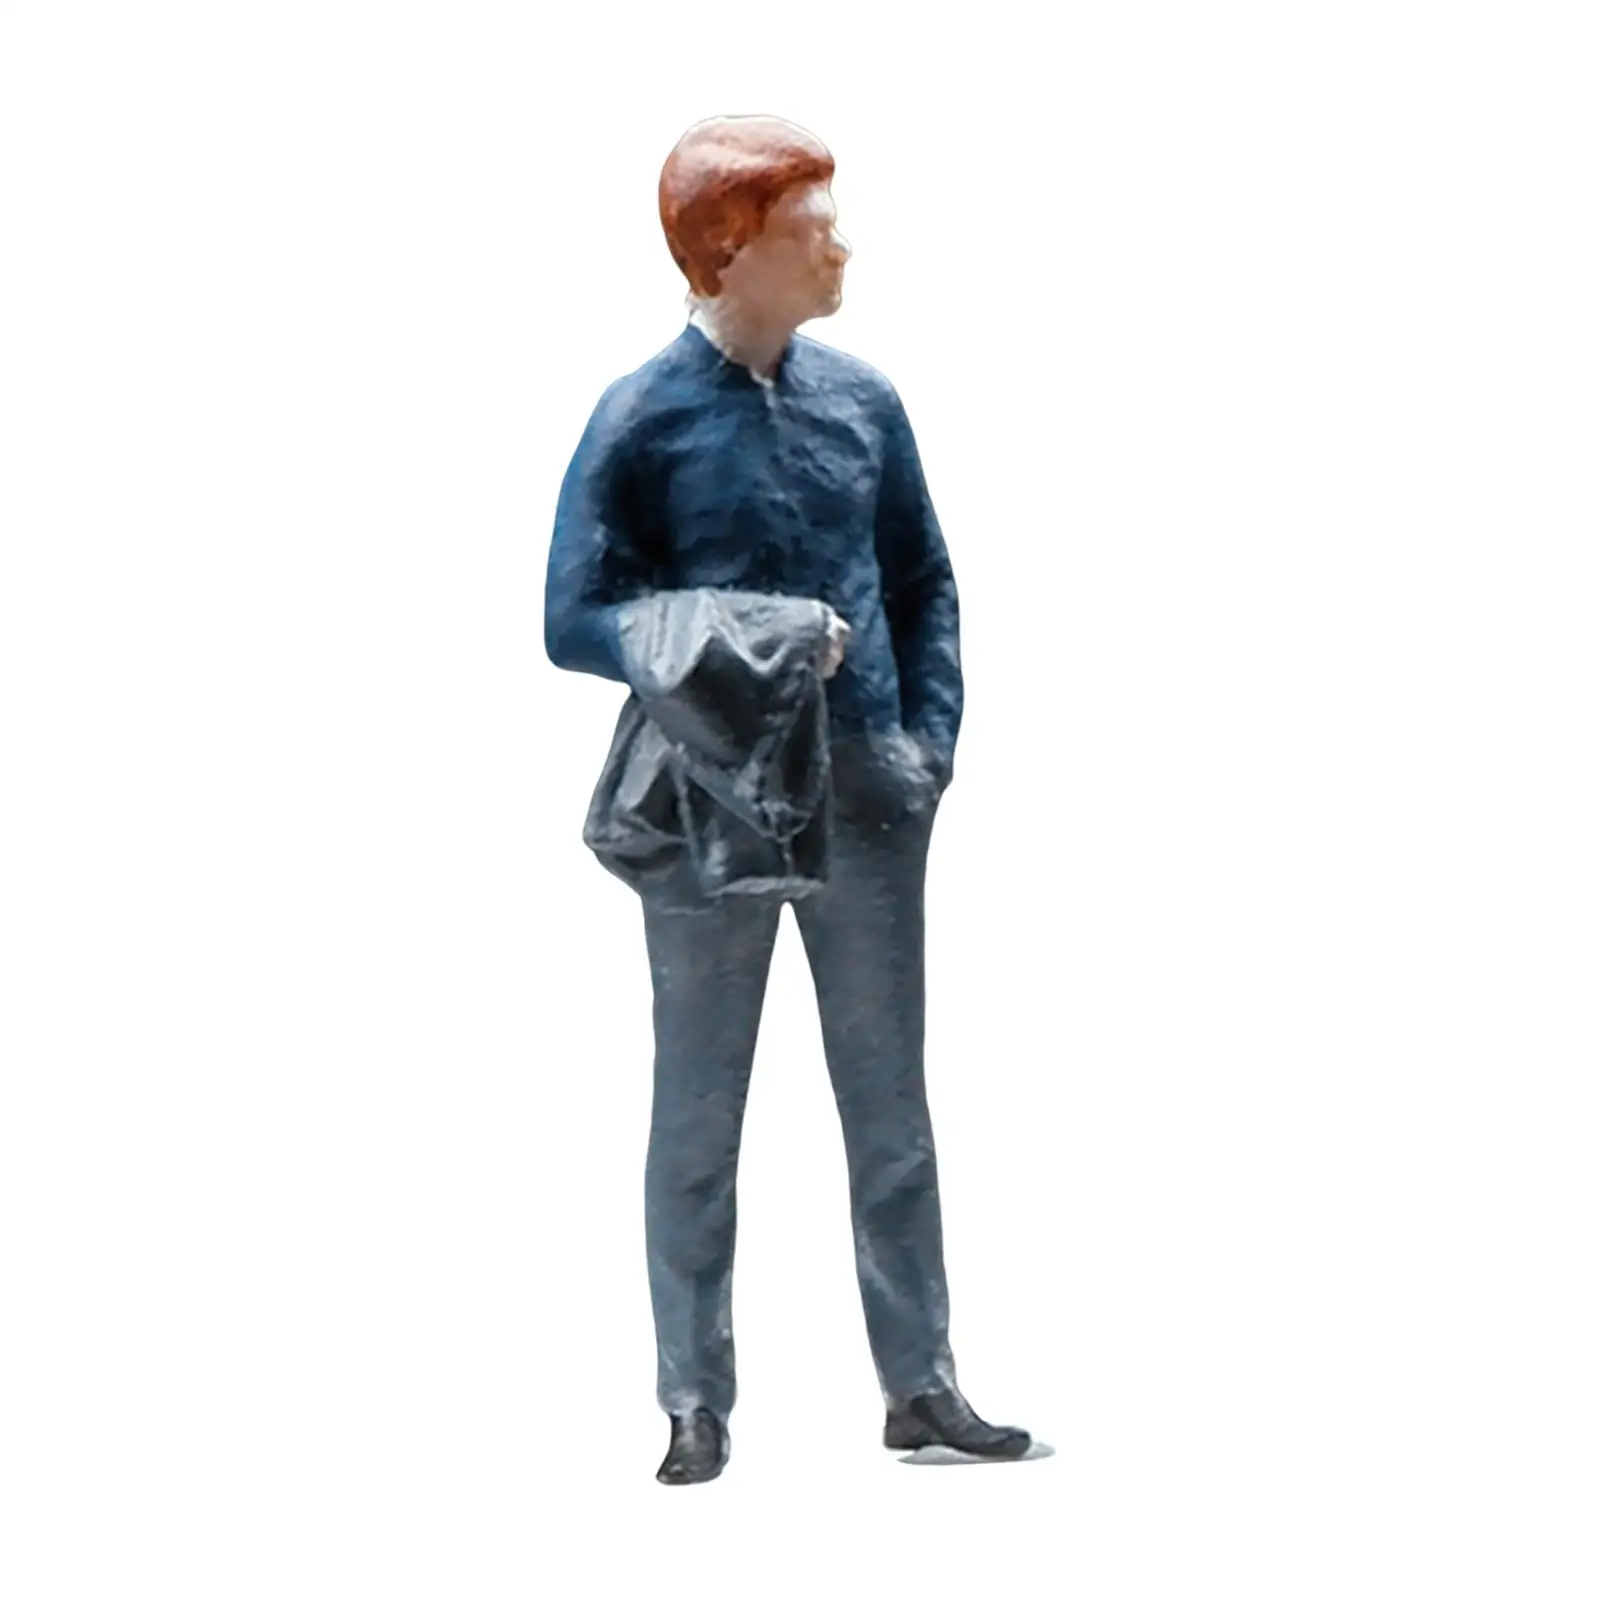 1/64 Men Figure Model S Scale Layout Trains Architectural Micro Landscape Miniature Scenes Diorama Scenery Resin Figurines Decor